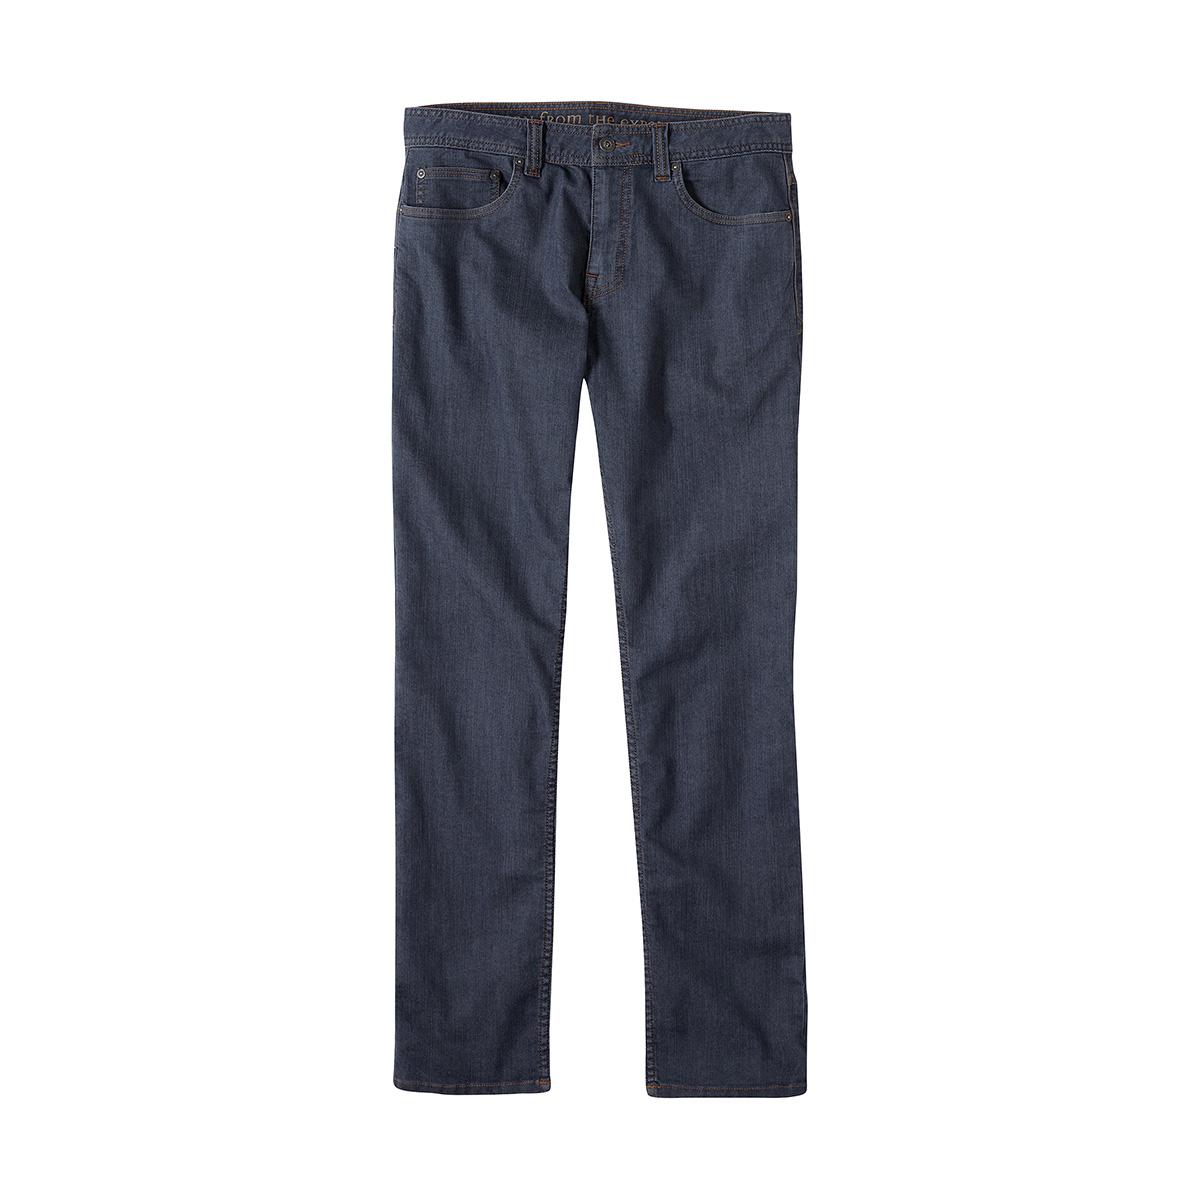  Men's Bridger Jeans - 30 Inch